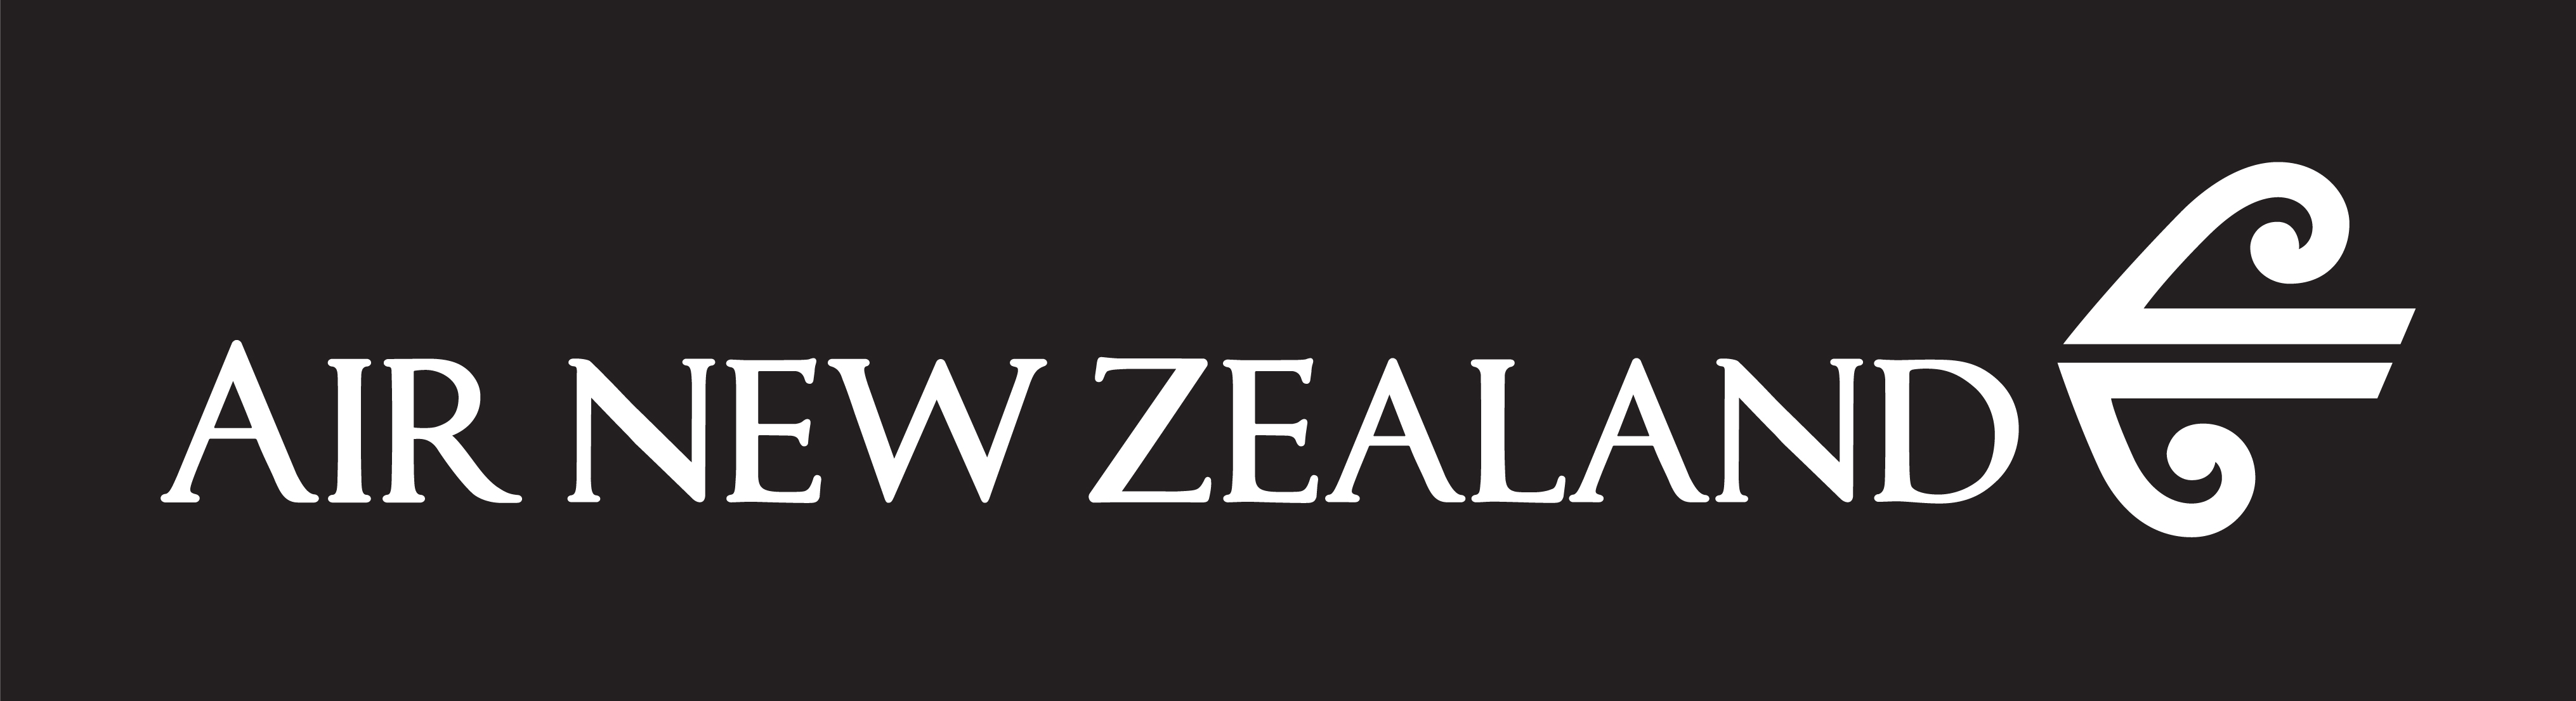 Air New Zealand - Air New Zealand, Transparent background PNG HD thumbnail